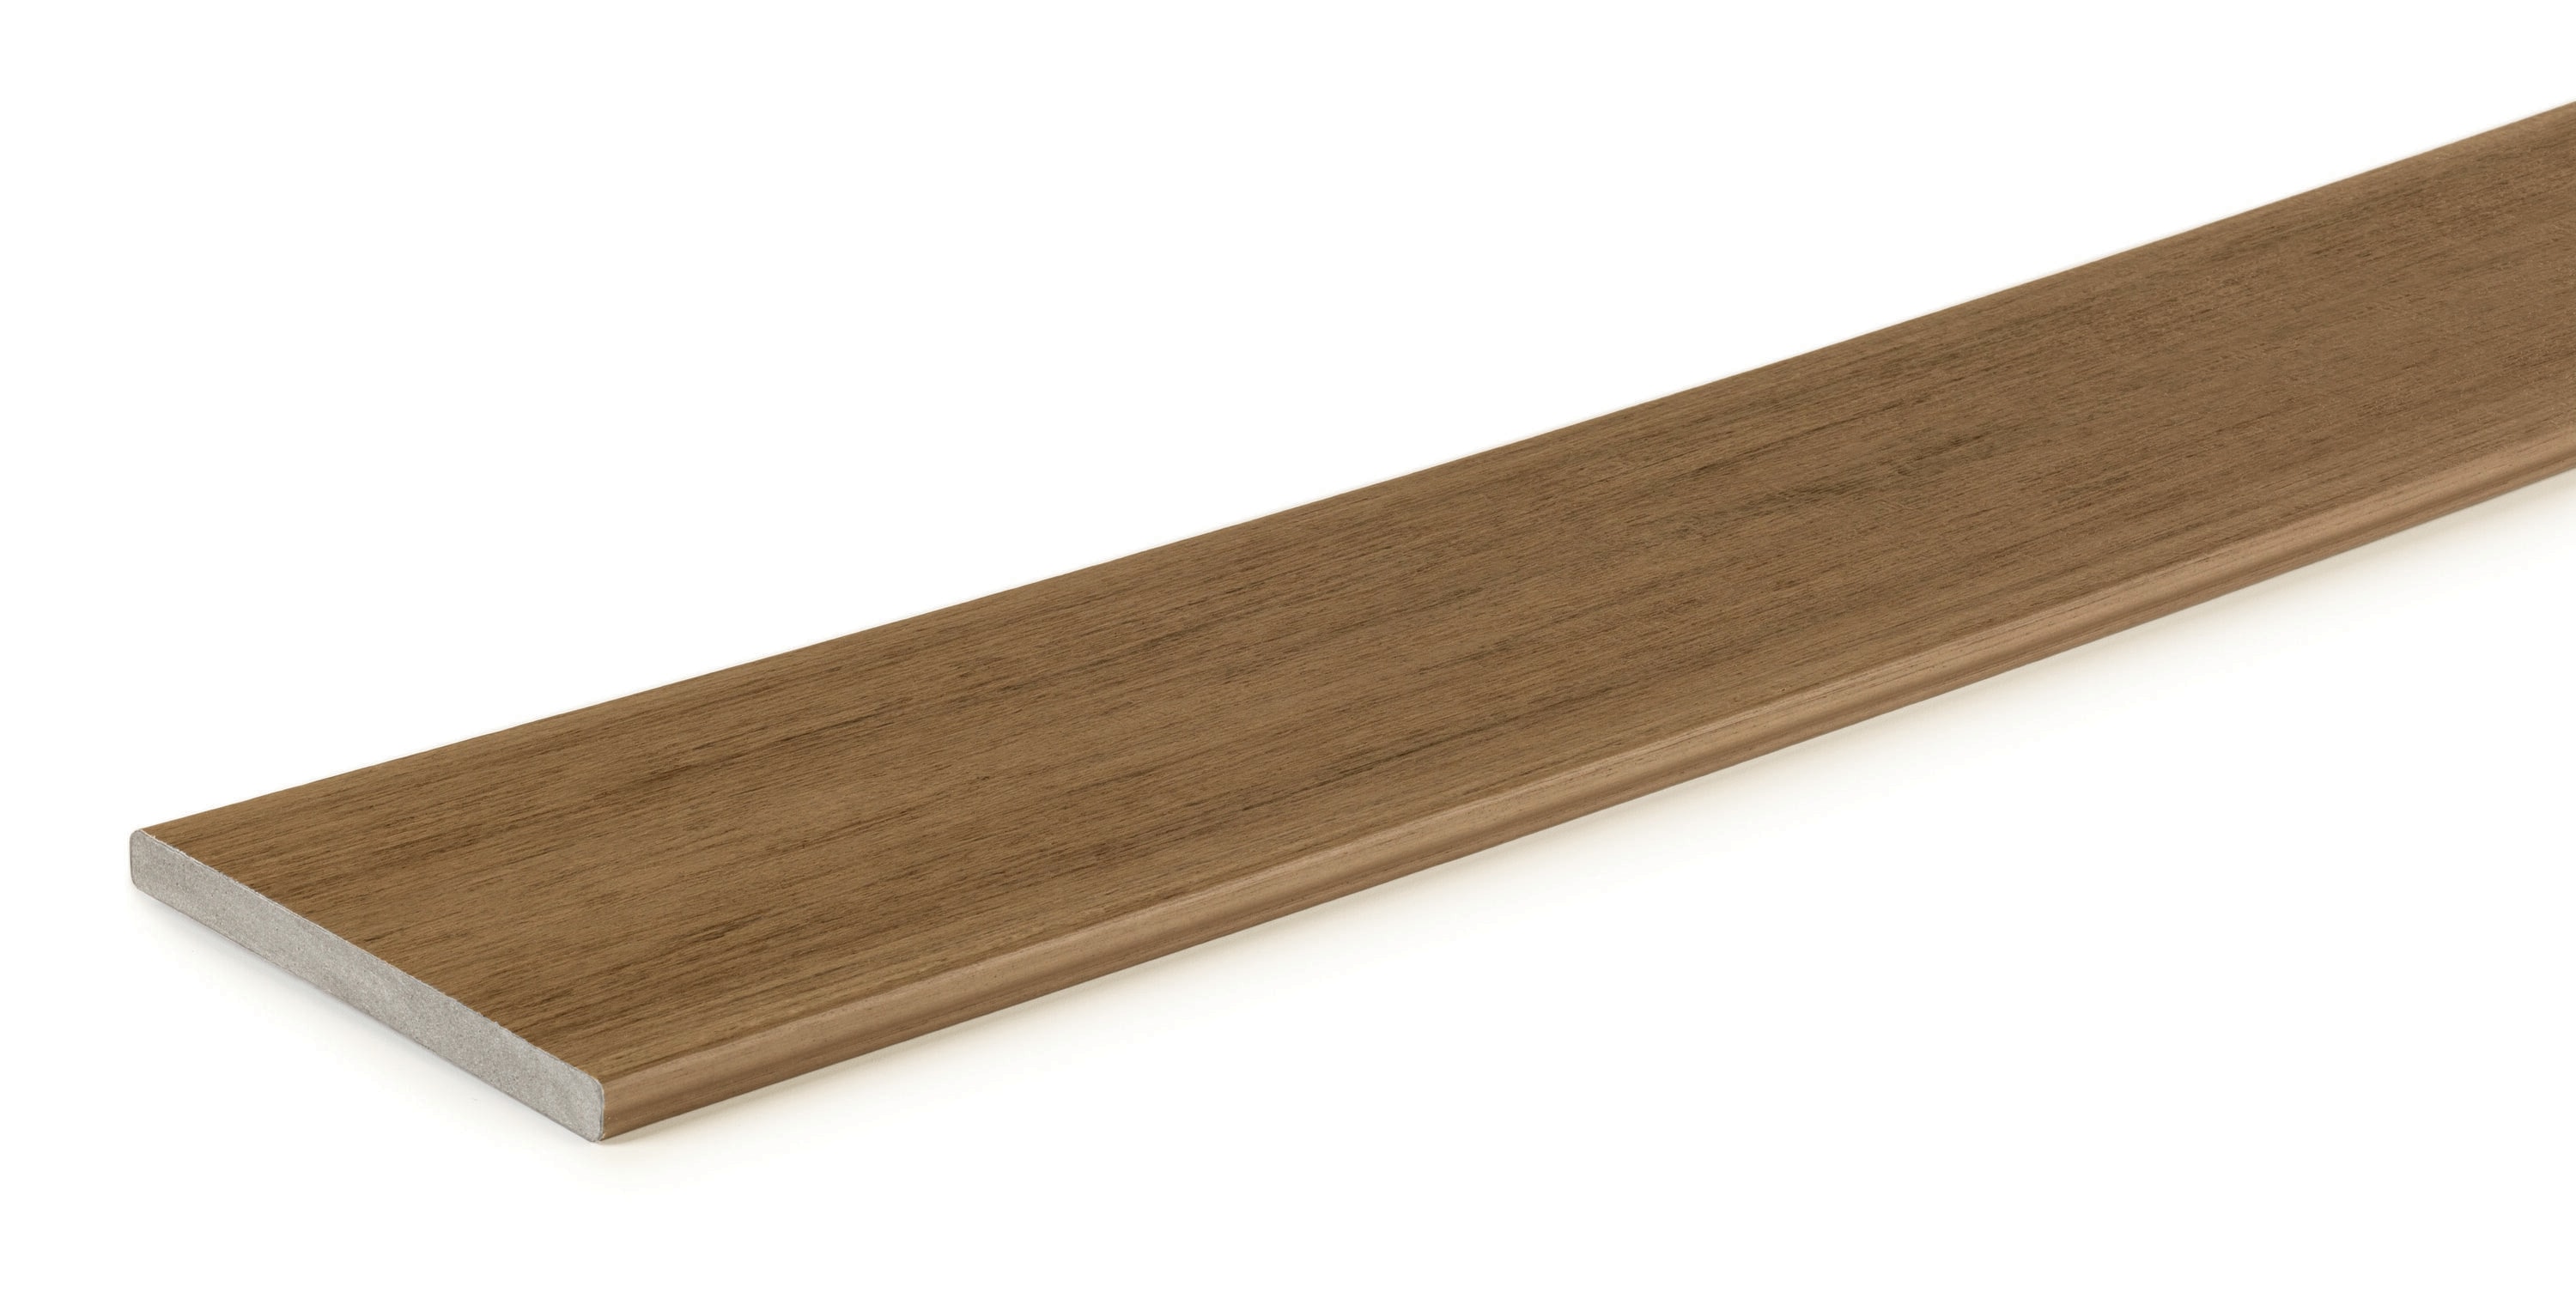 Prime+ 1/2-in x 8-in x 12-ft Coconut Husk Square Composite Riser Deck Board in Brown/Tan | - TimberTech ERISERCH